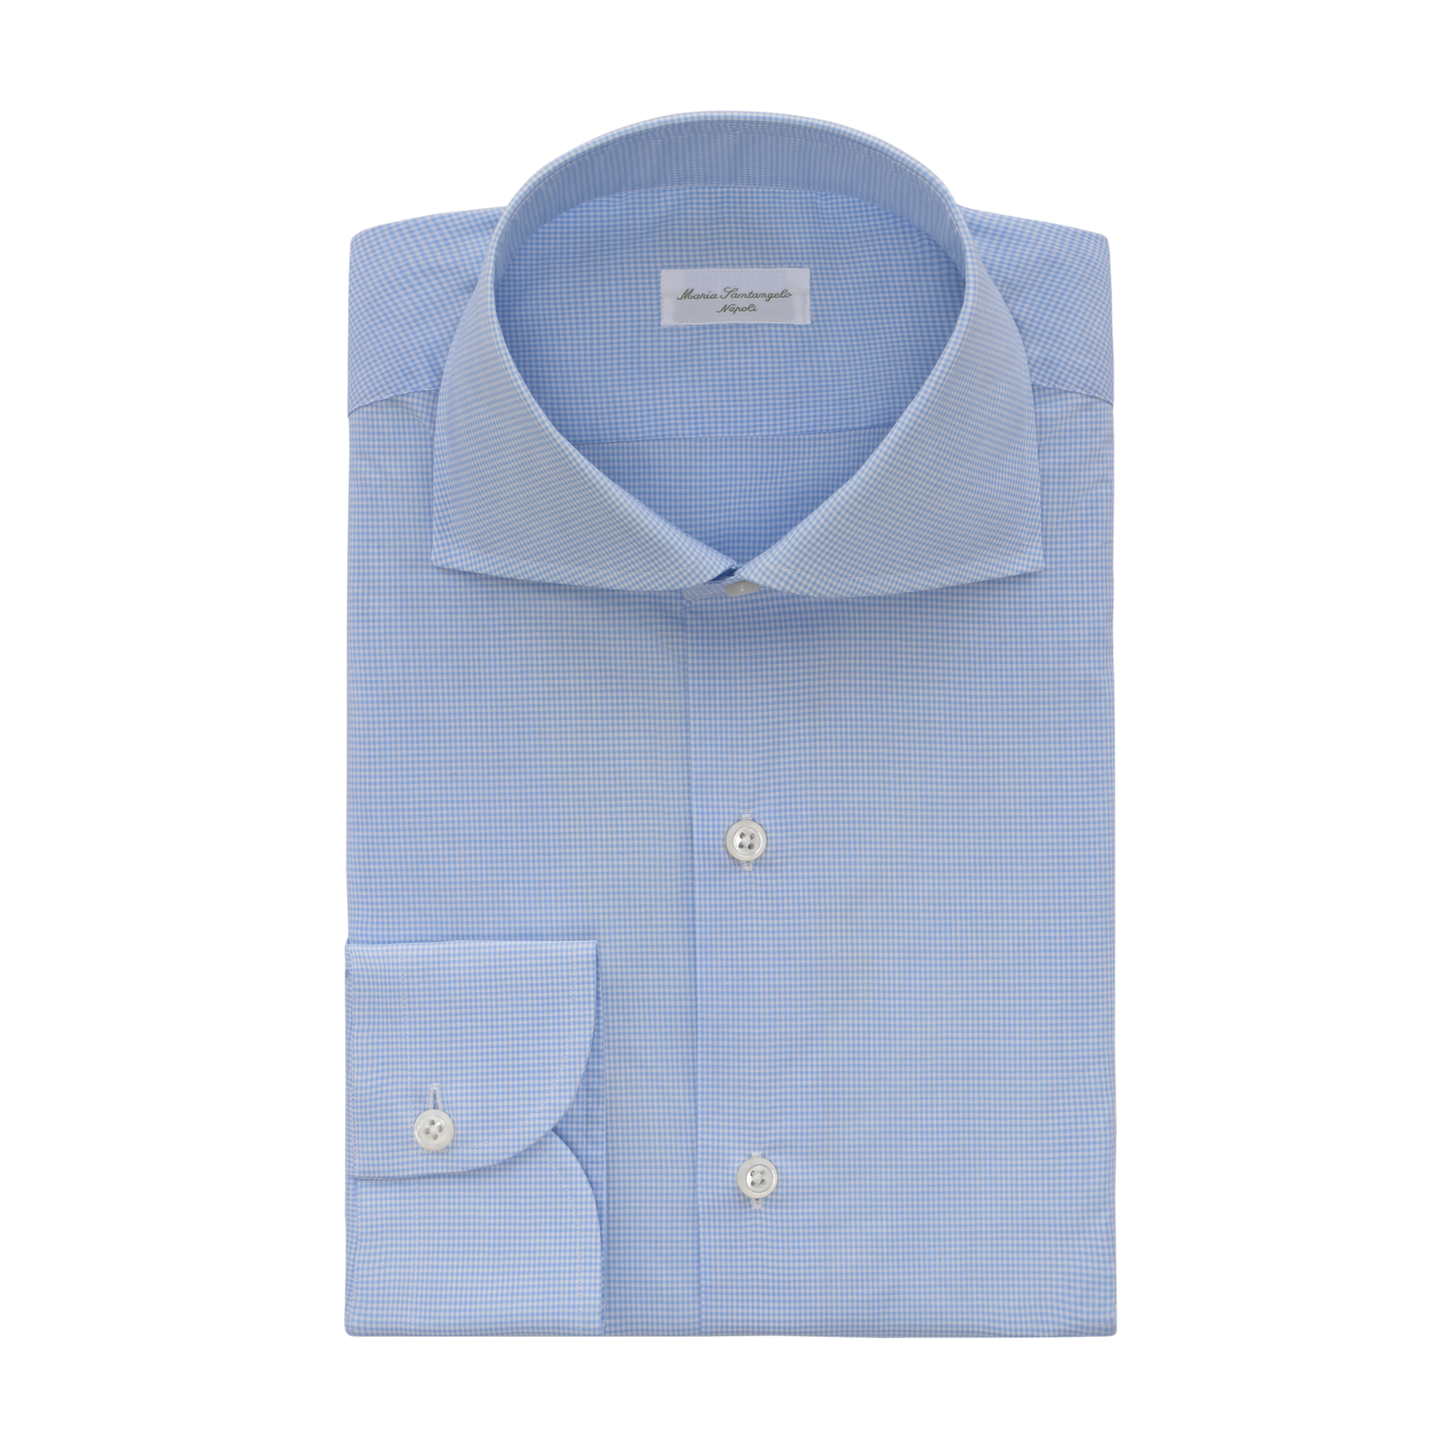 Maria Santangelo Checked Cotton Shirt in Light Blue - SARTALE